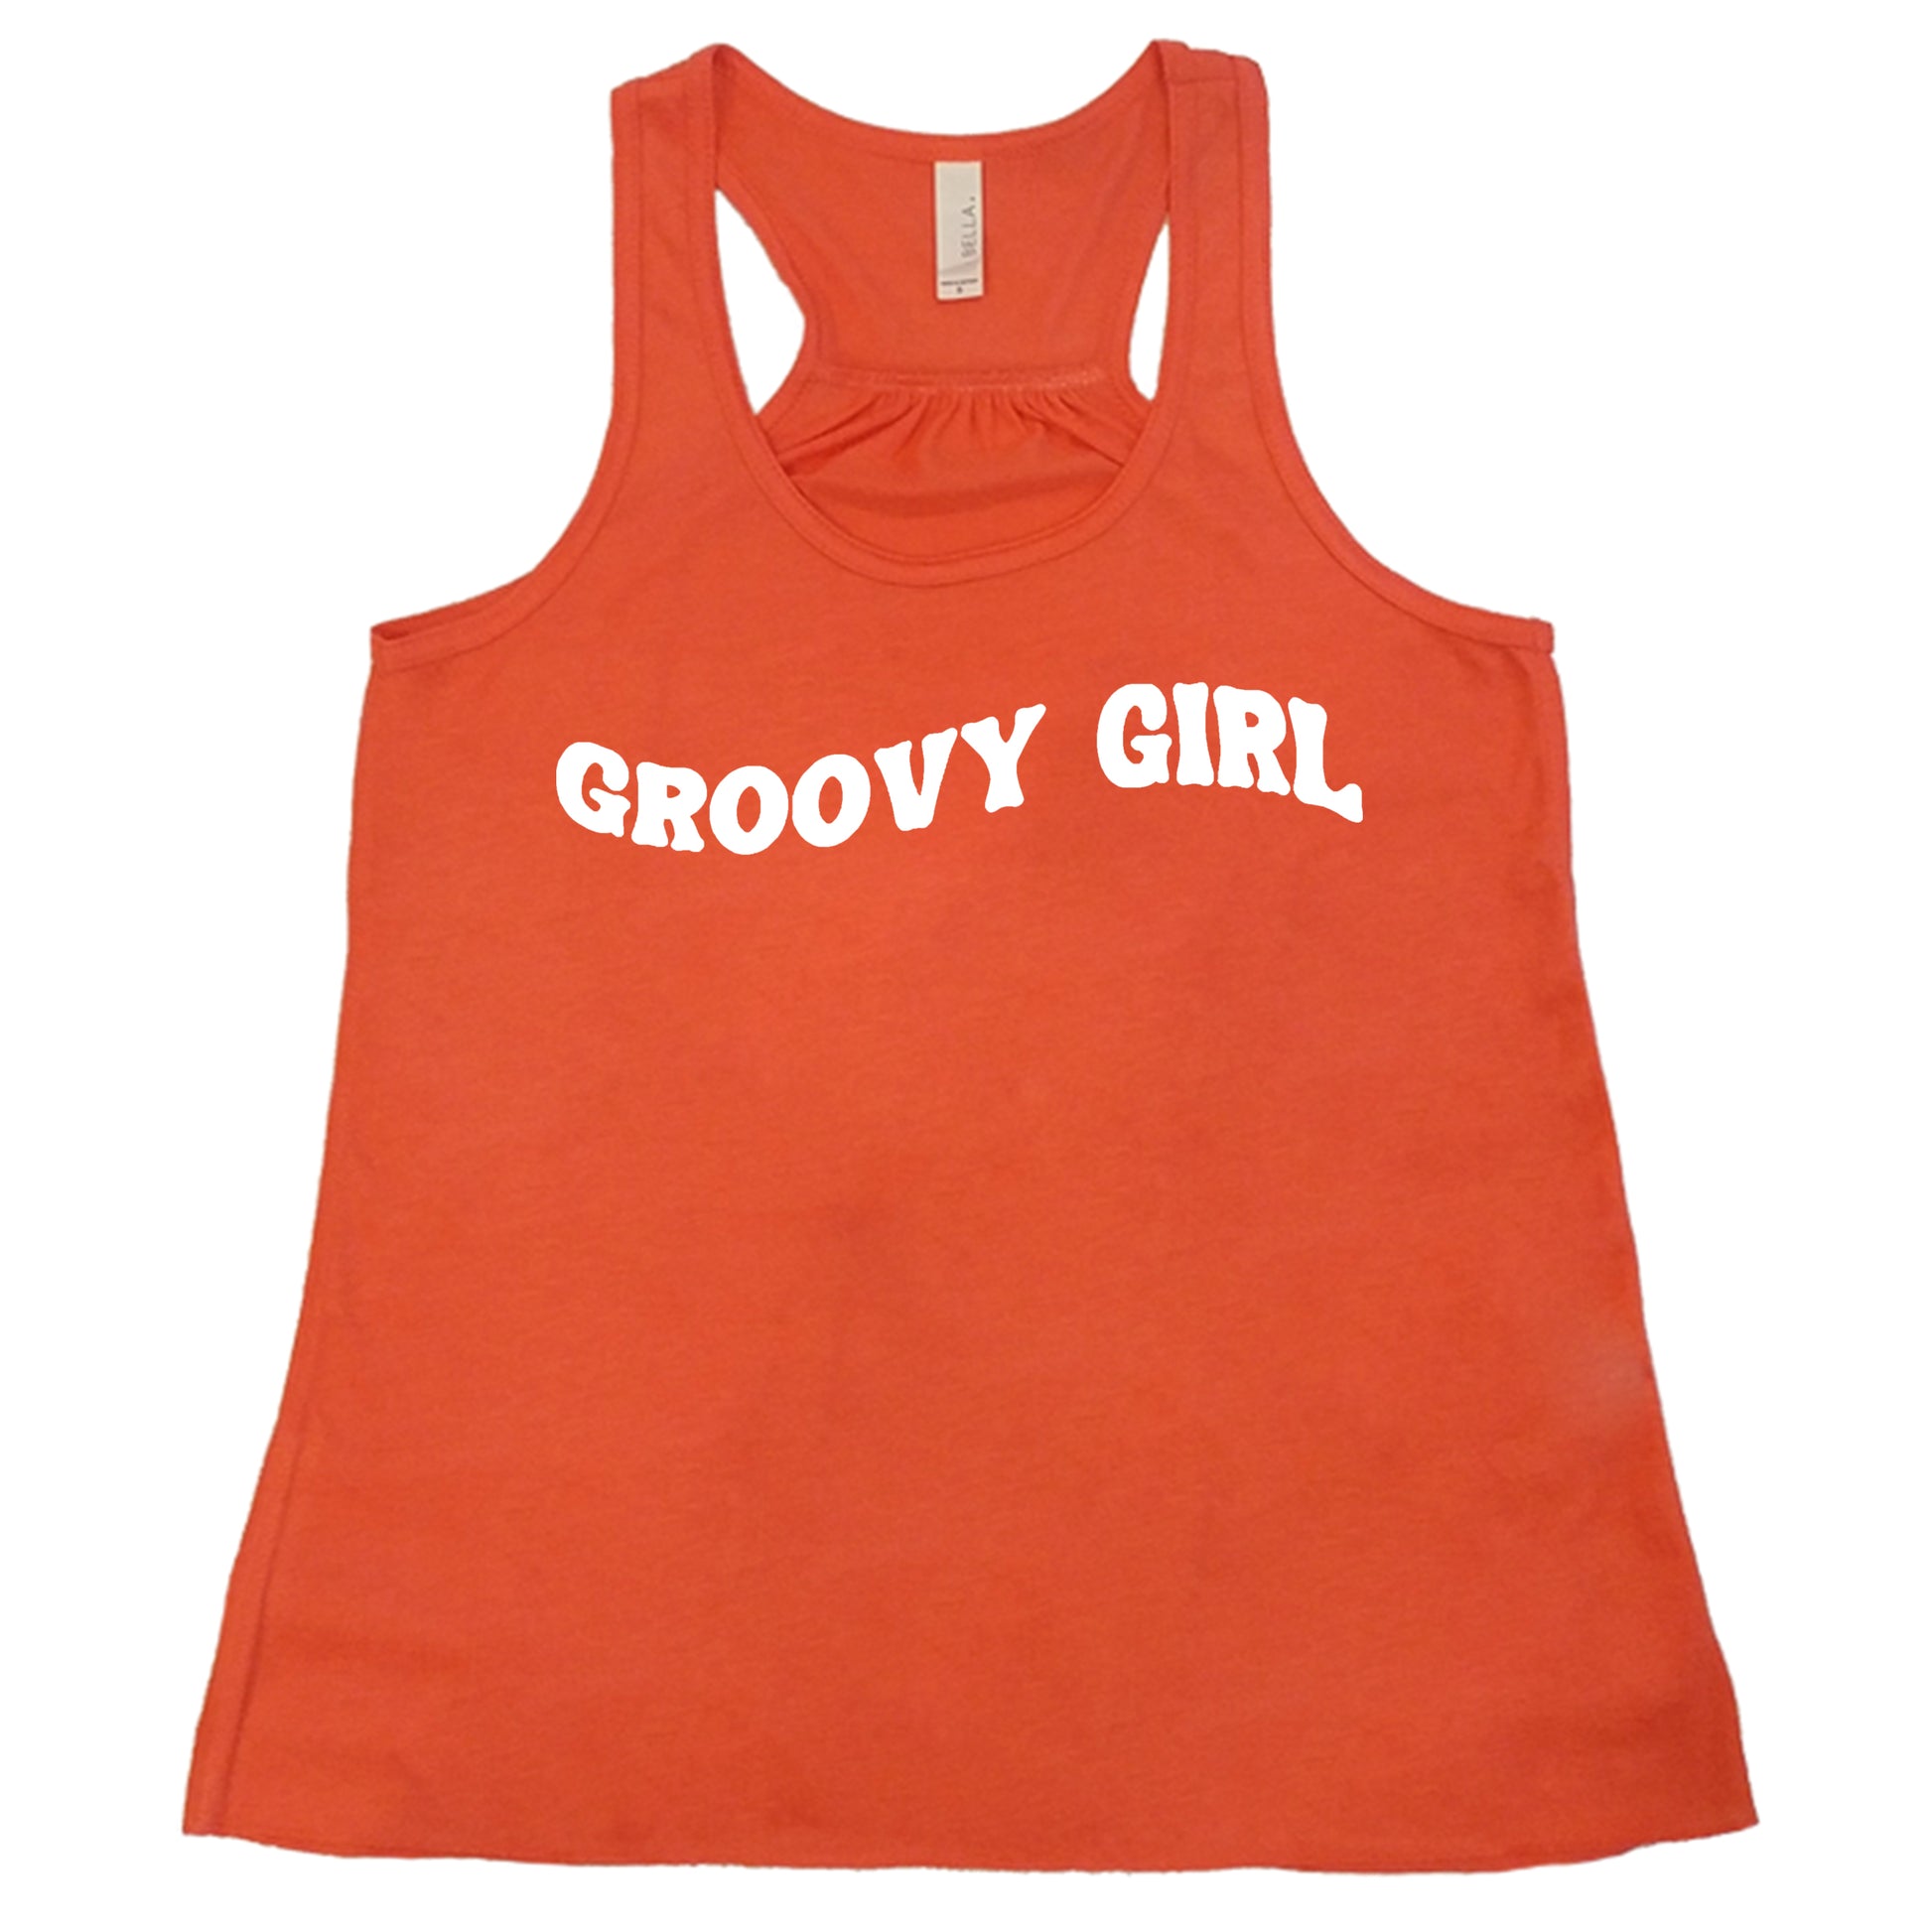 coral groovy girl racerback shirt